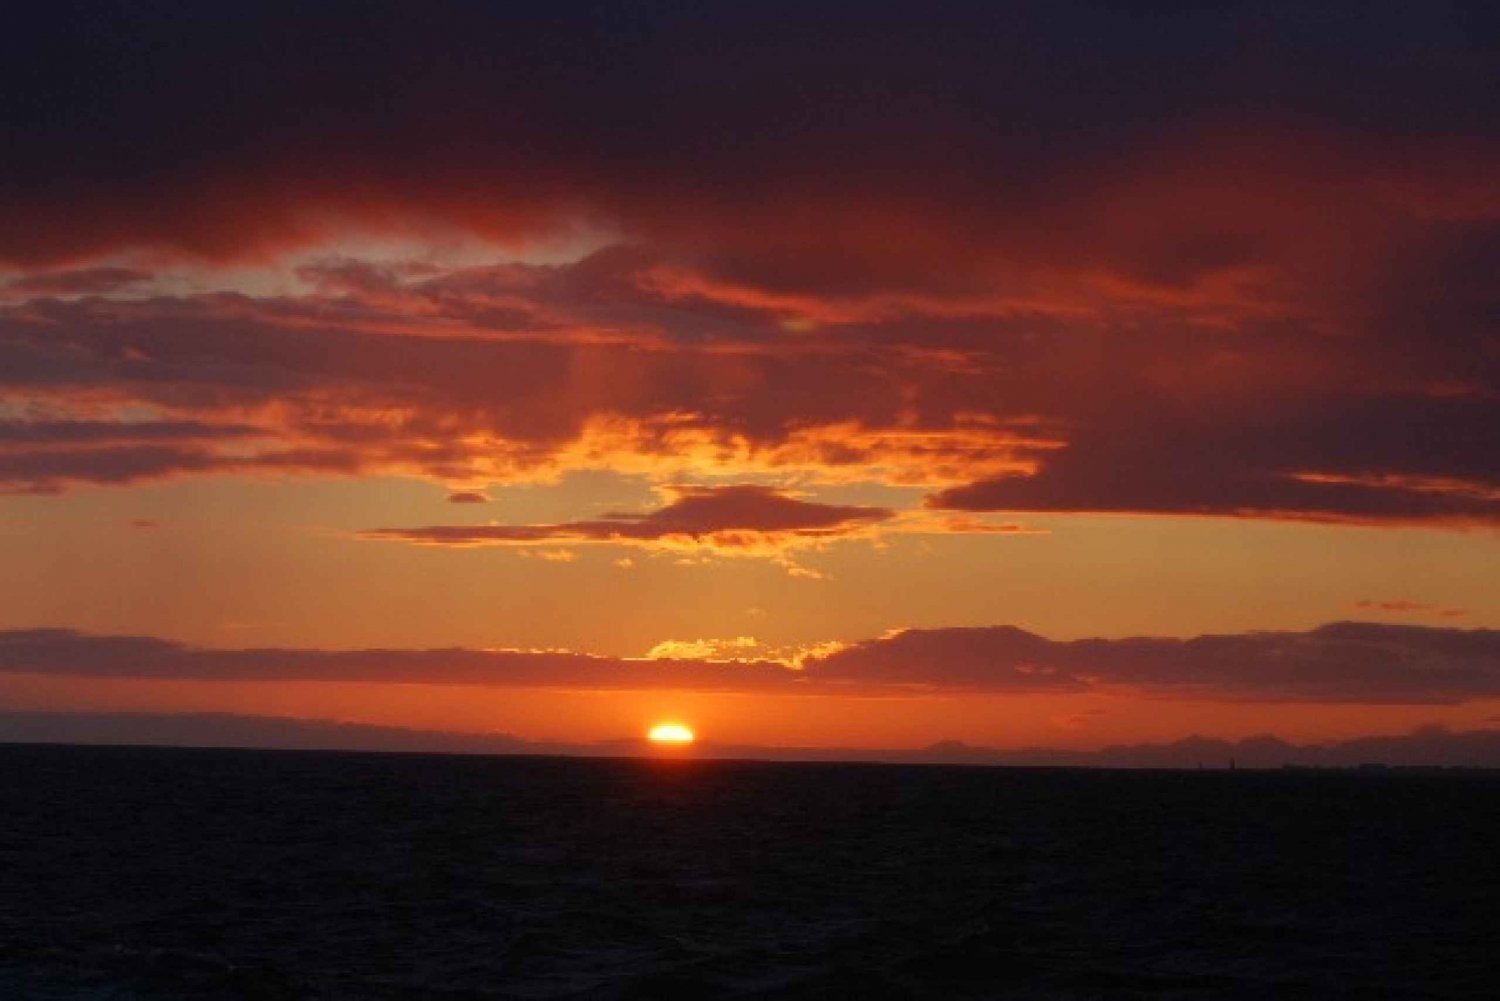 Reykjavik: Midnight Sun Whale Watching Tour